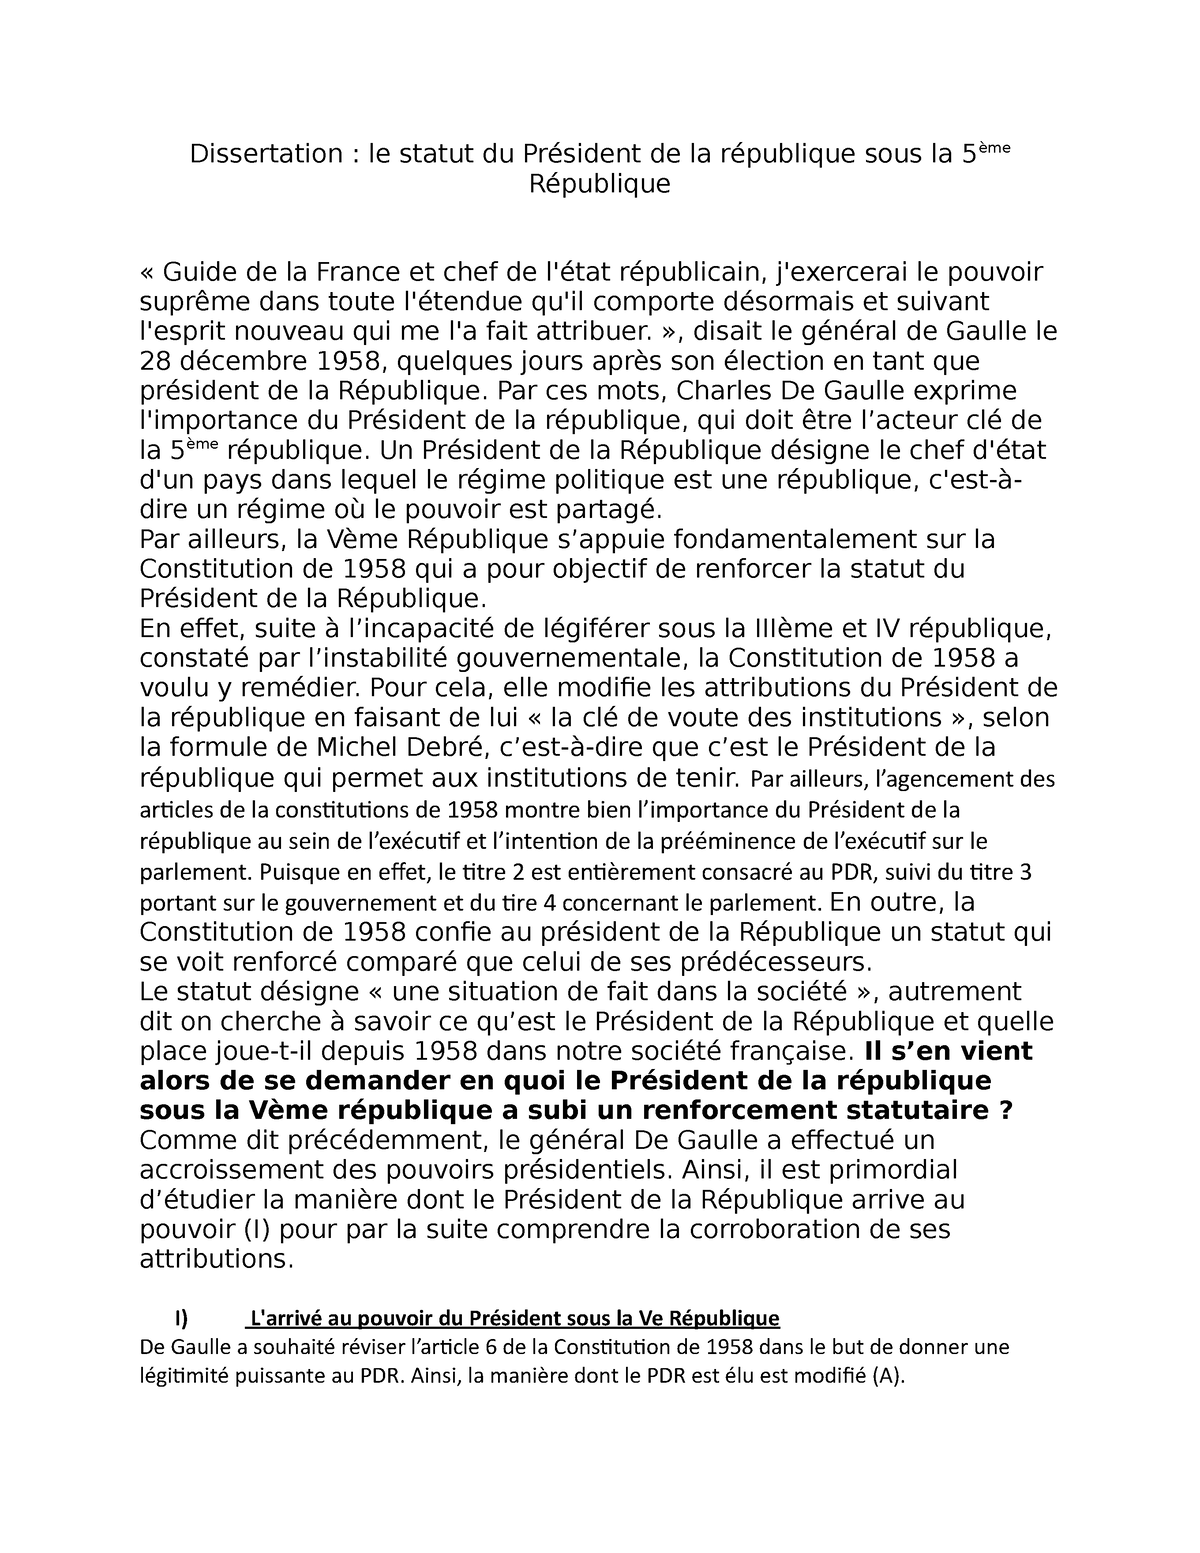 dissertation president 5eme republique